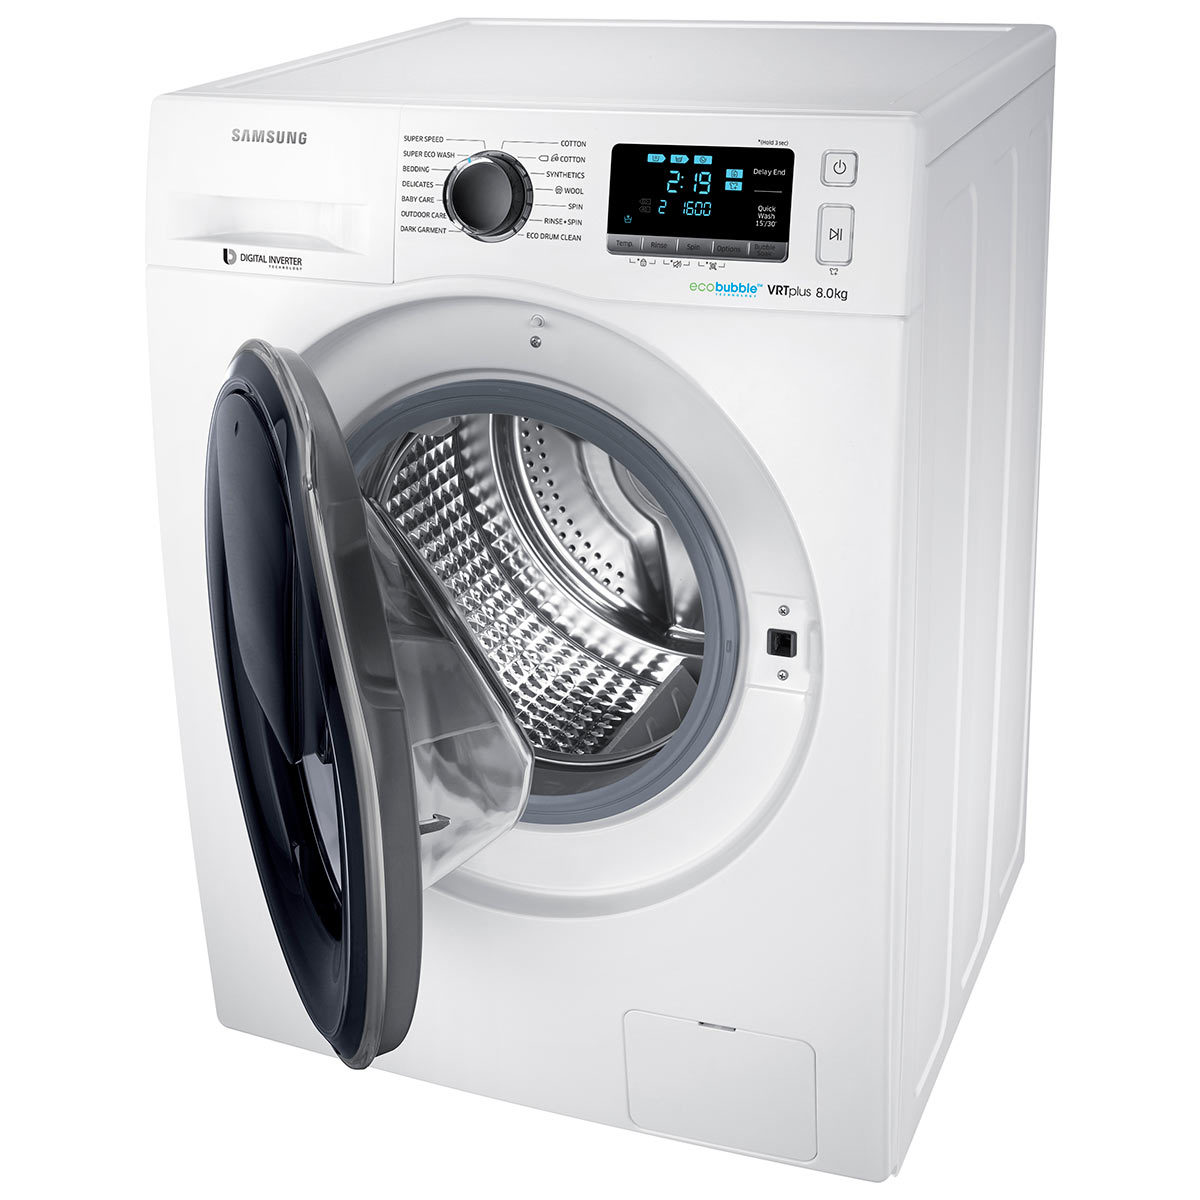 Samsung WW80K6610QW/EU, 8kg, 1600rpm, AddWash Washing Machine A+++ Rated in White